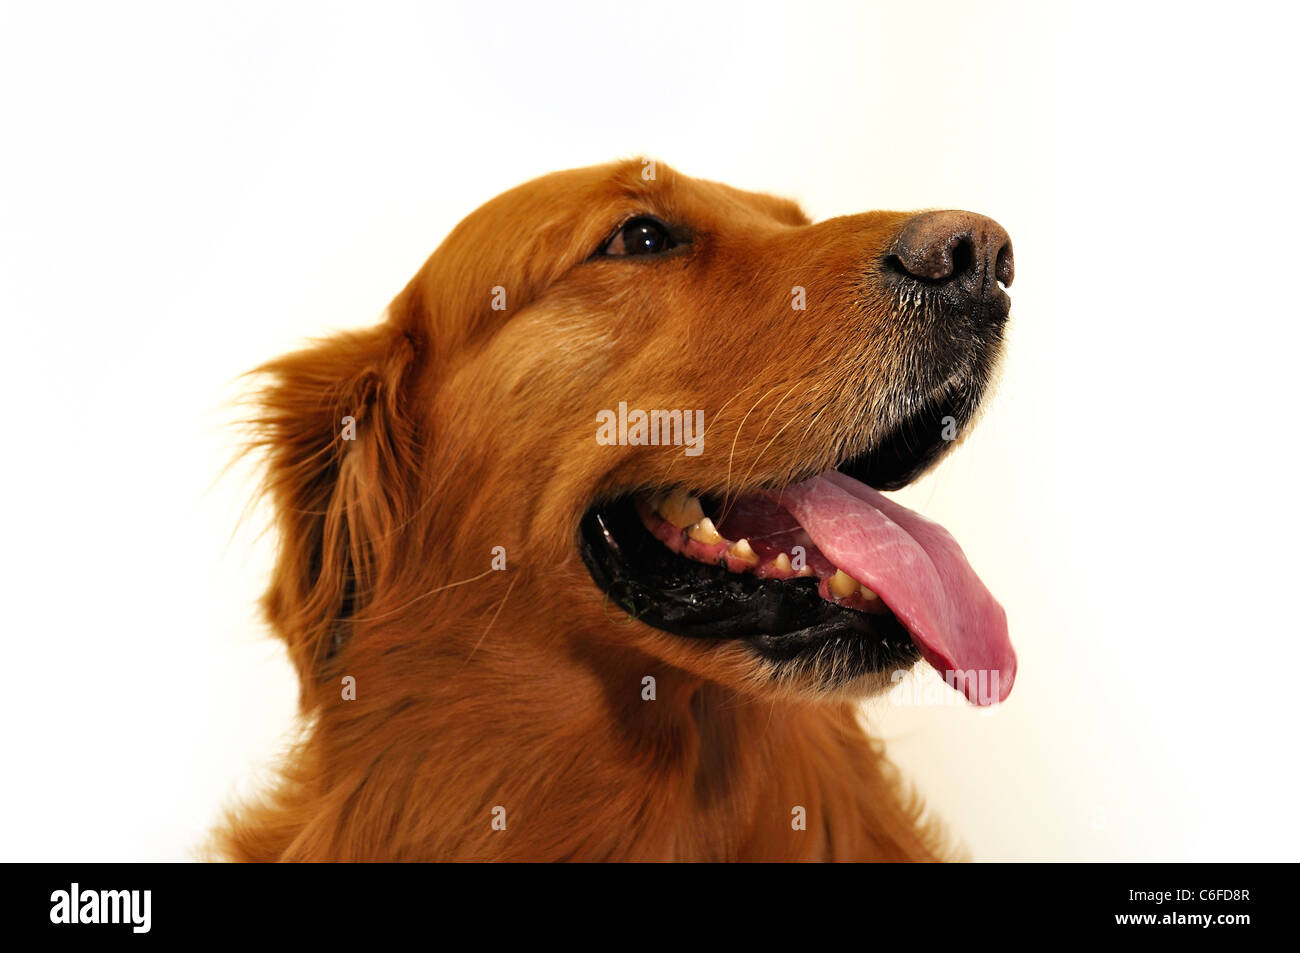 Golden retriever labrador face close up. Banque D'Images